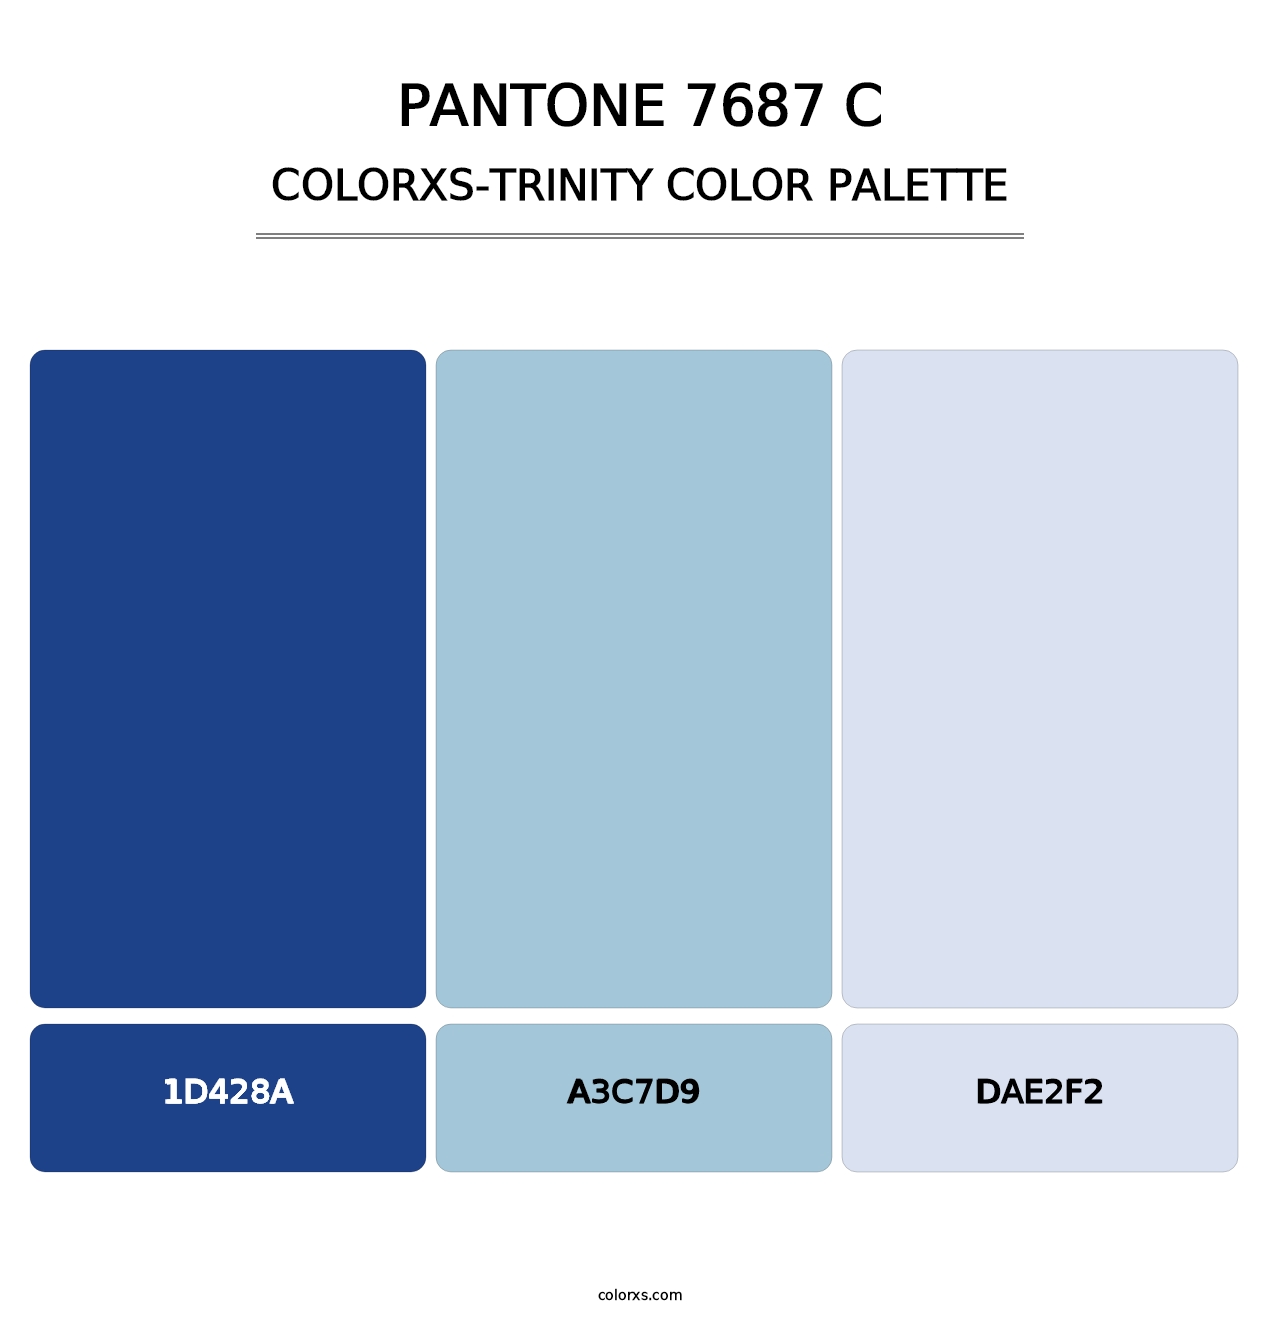 PANTONE 7687 C - Colorxs Trinity Palette